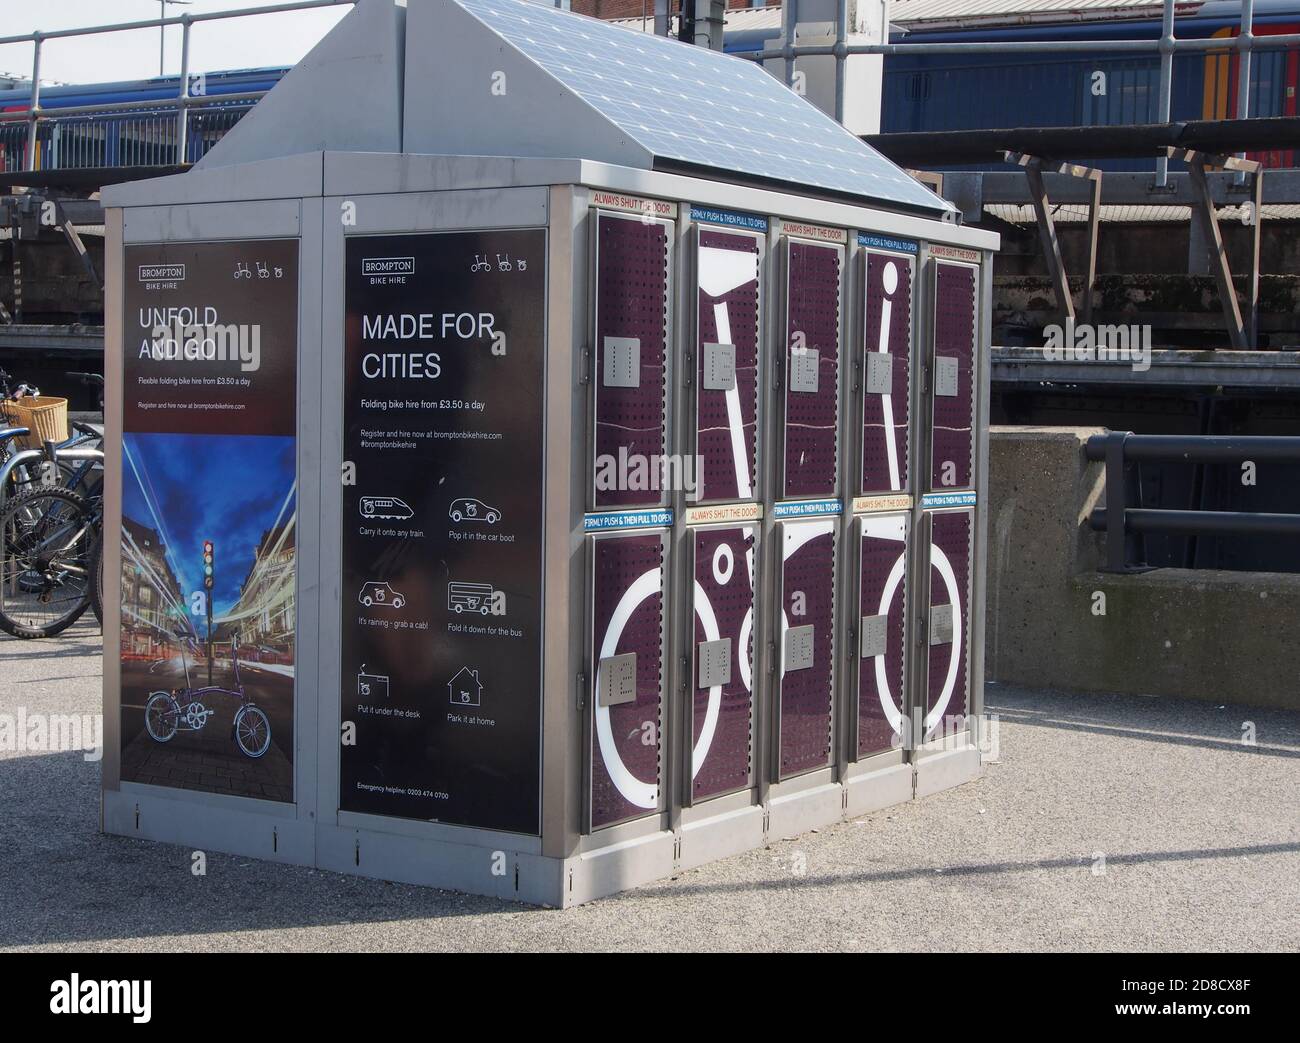 Un casillero de bicicletas para guardar bicicletas de forma segura en Portsmouth, Hampshire, Inglaterra Foto de stock